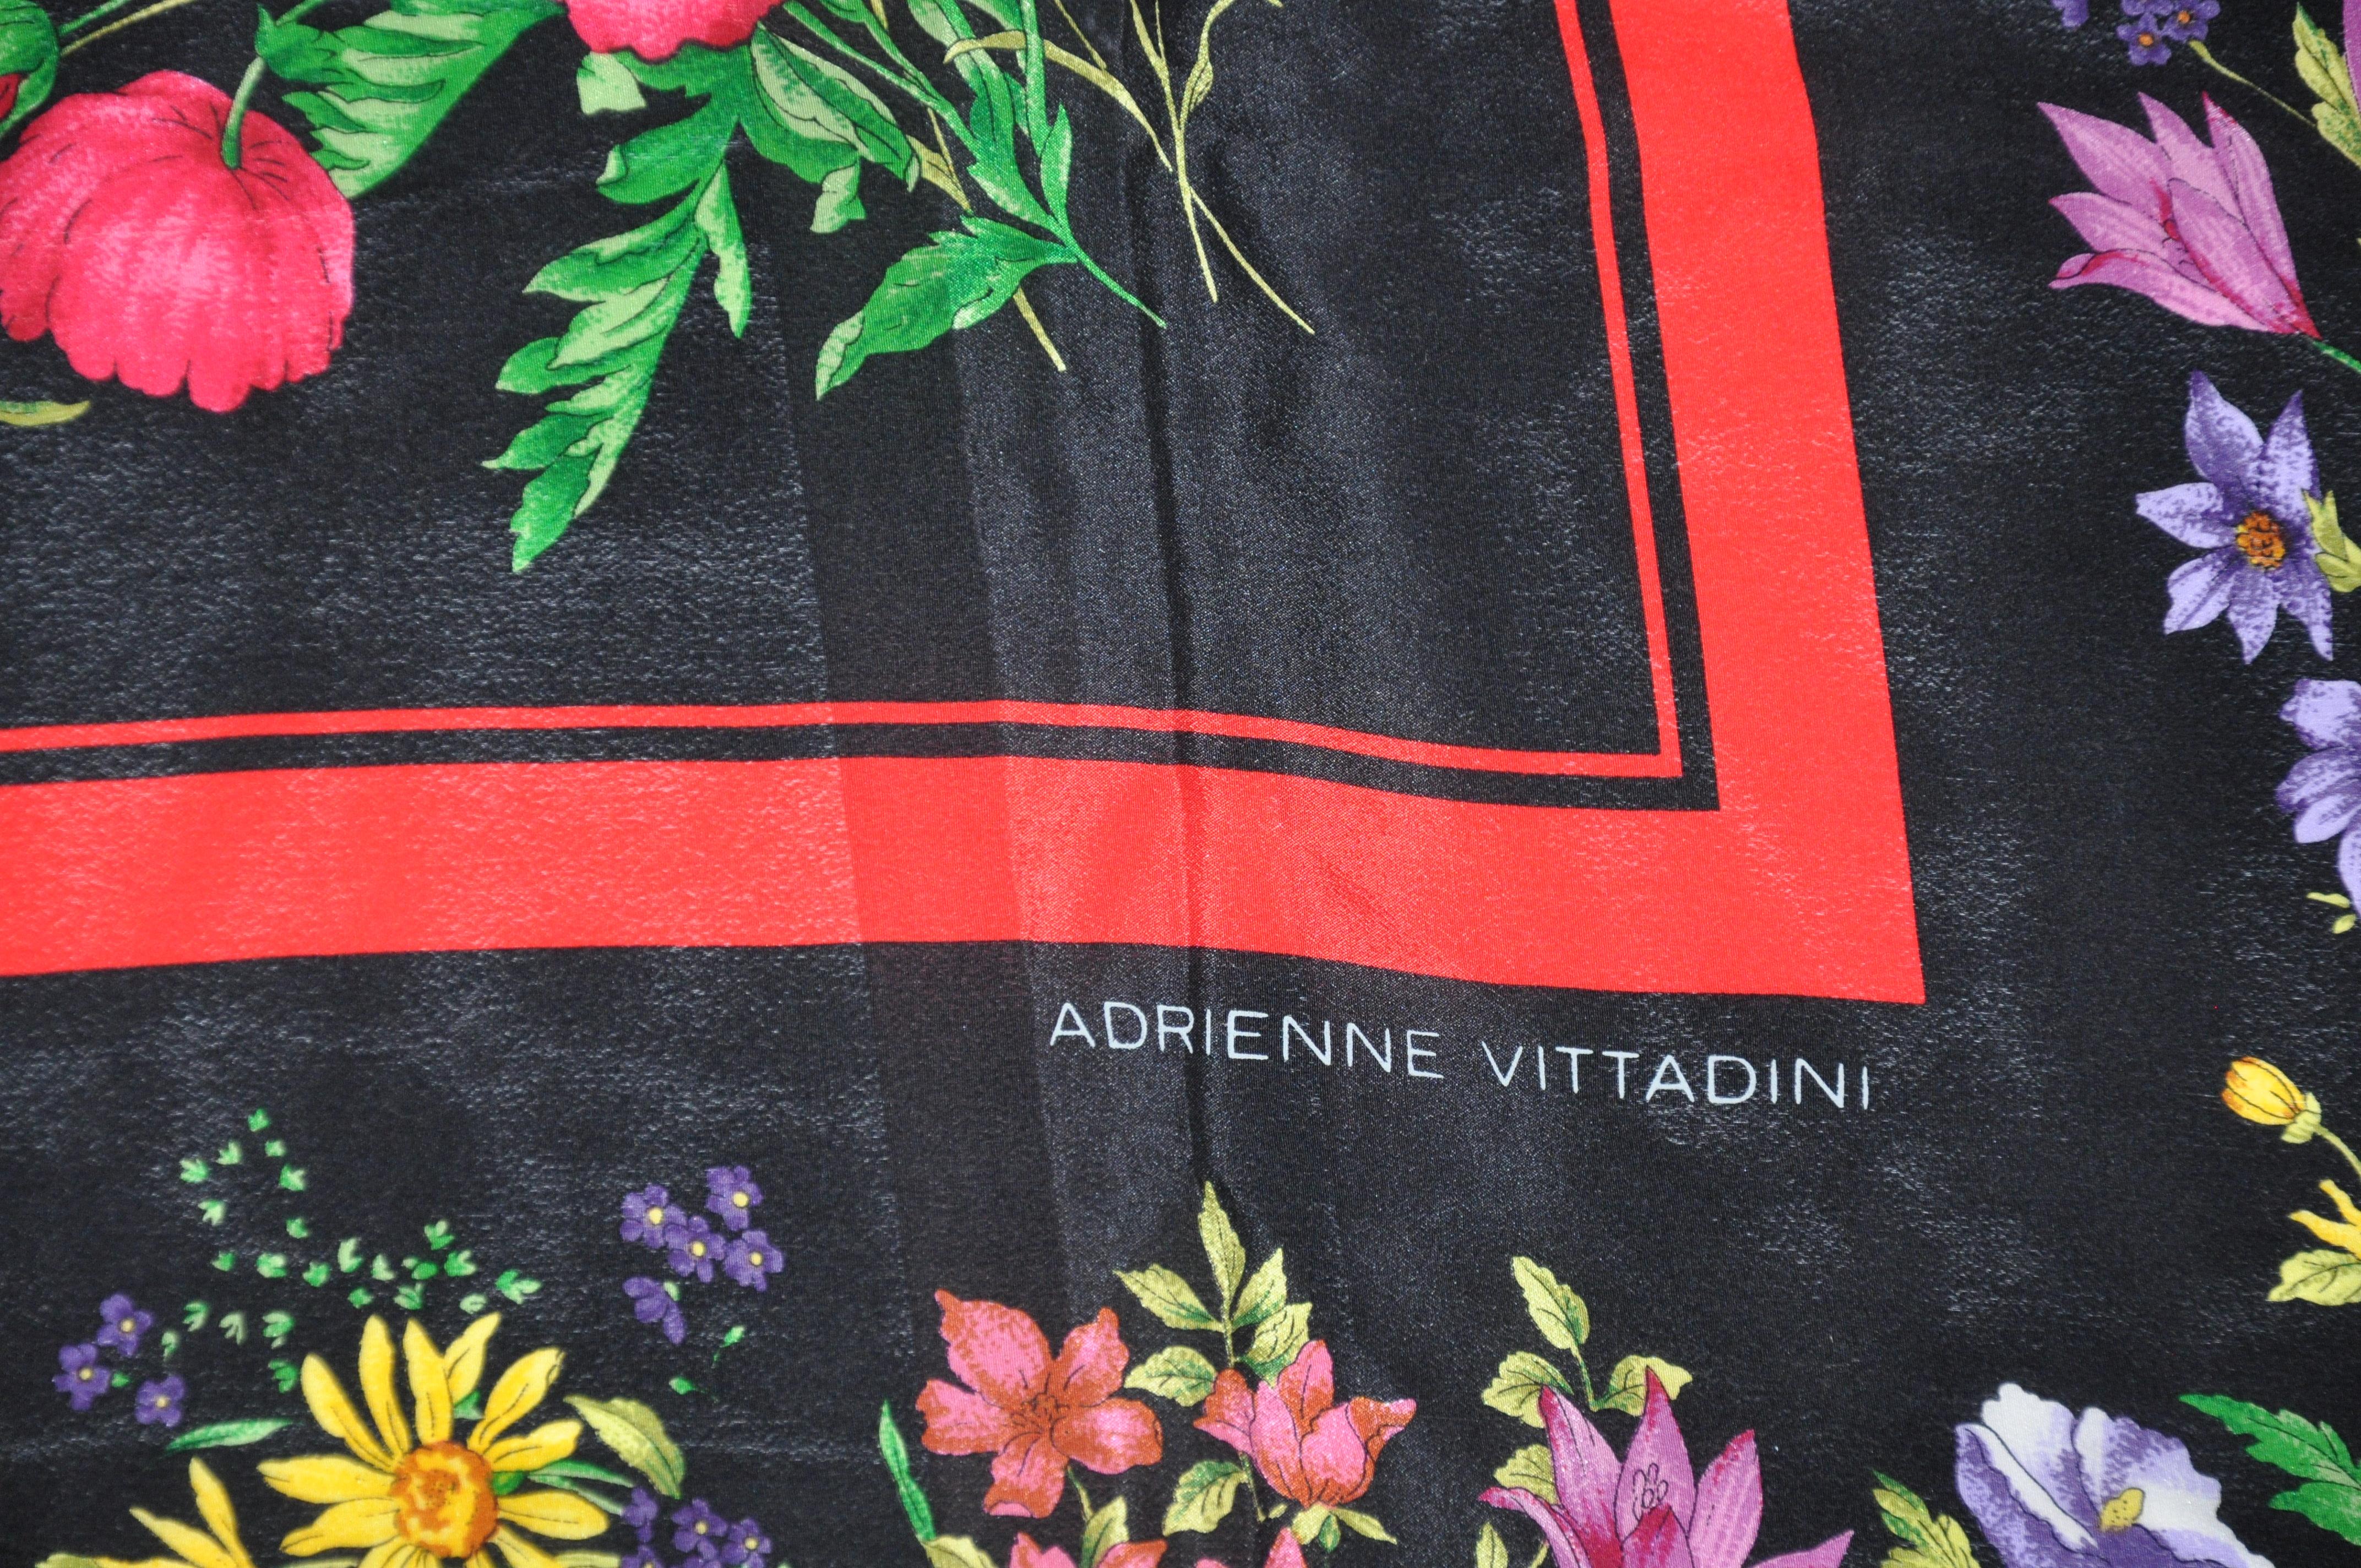       Adrienne Vittadini wonderfully elegant 